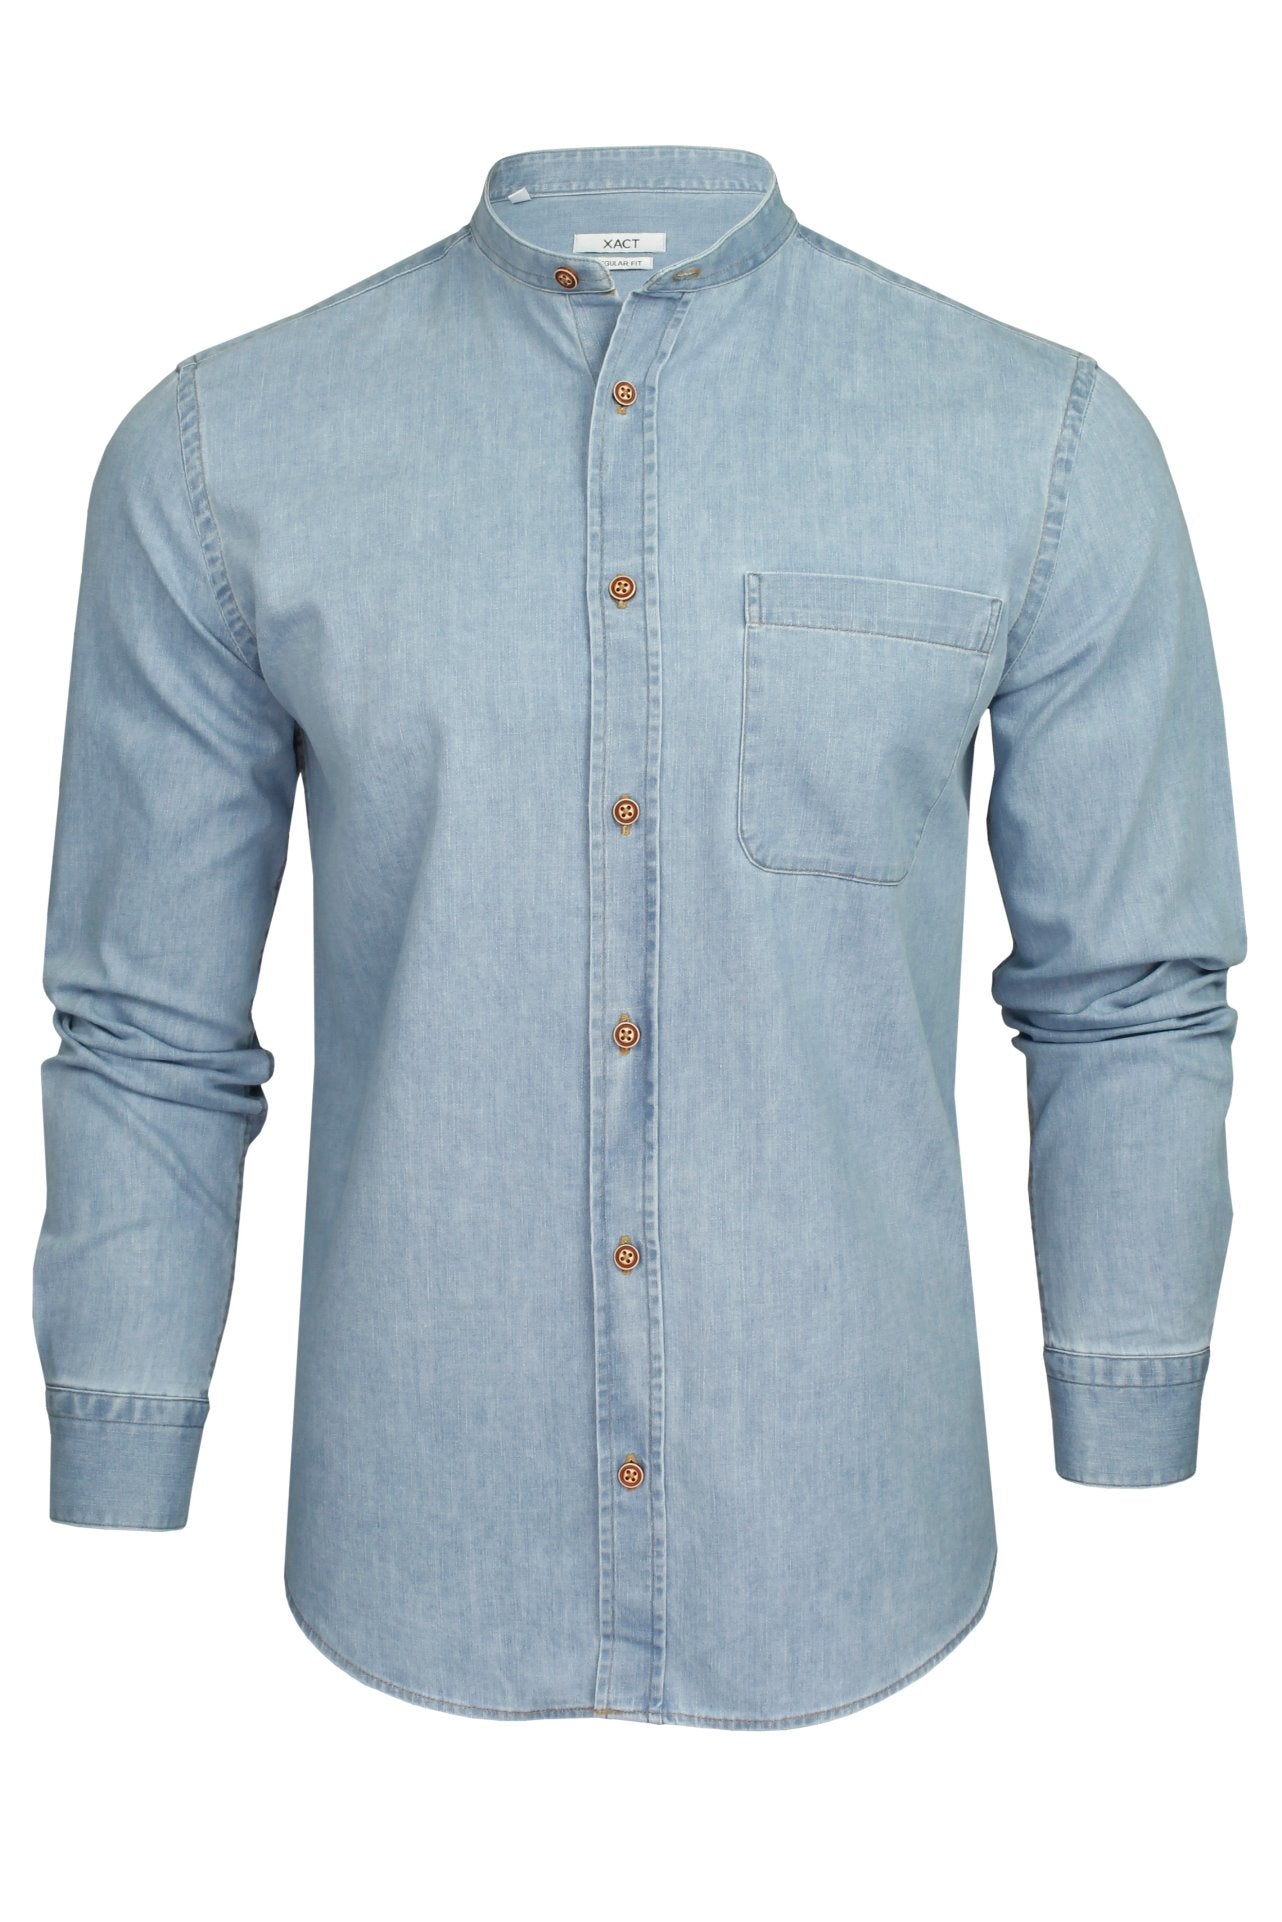 Xact Mens 6.6 oz Denim Band / Grandad Collar Shirt - Long Sleeved-Main Image